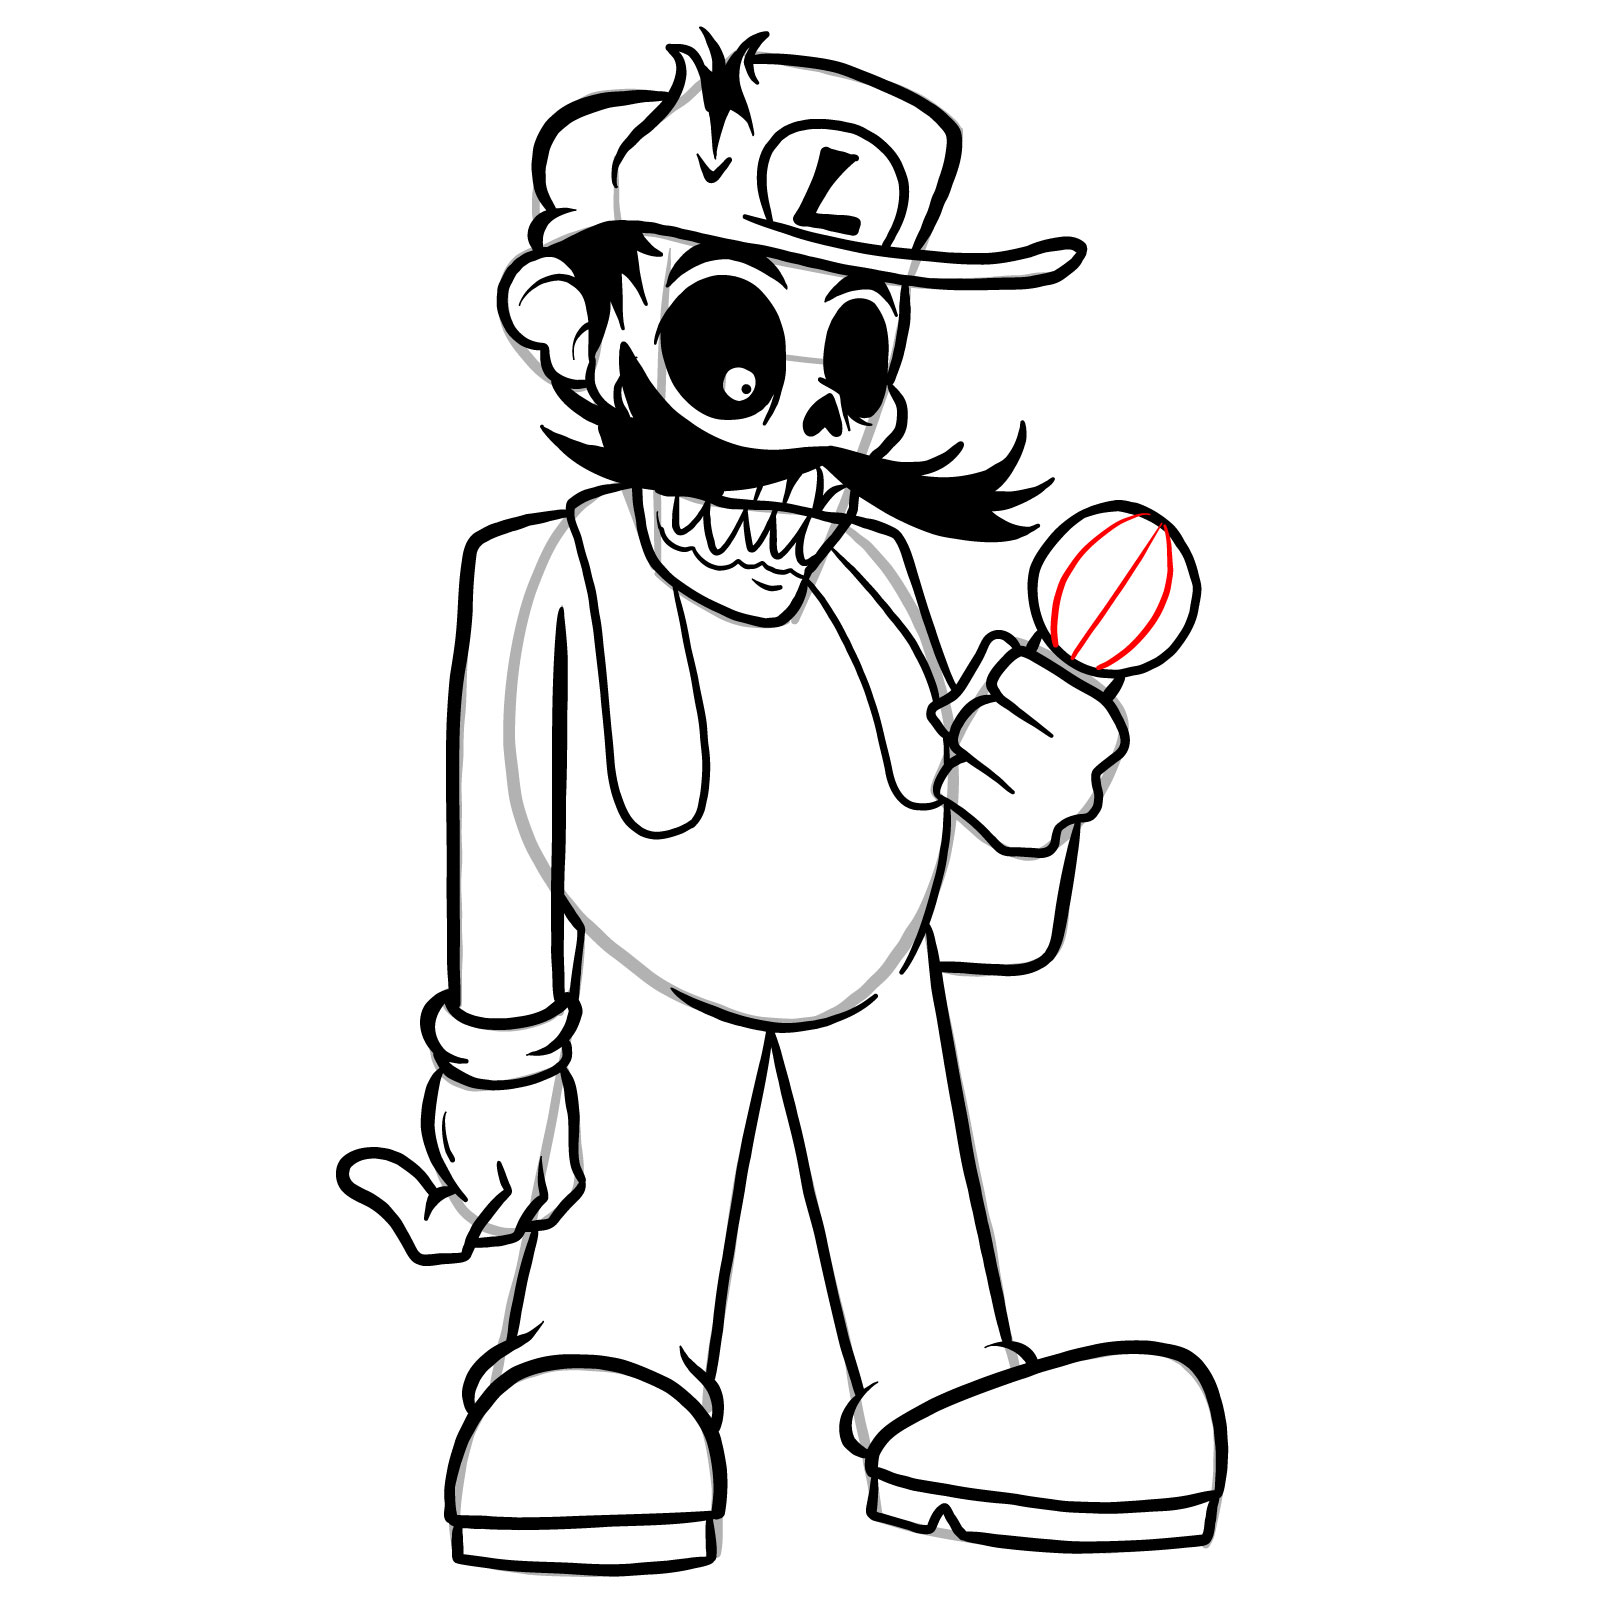 How to draw I HATE YOU Luigi - step 31